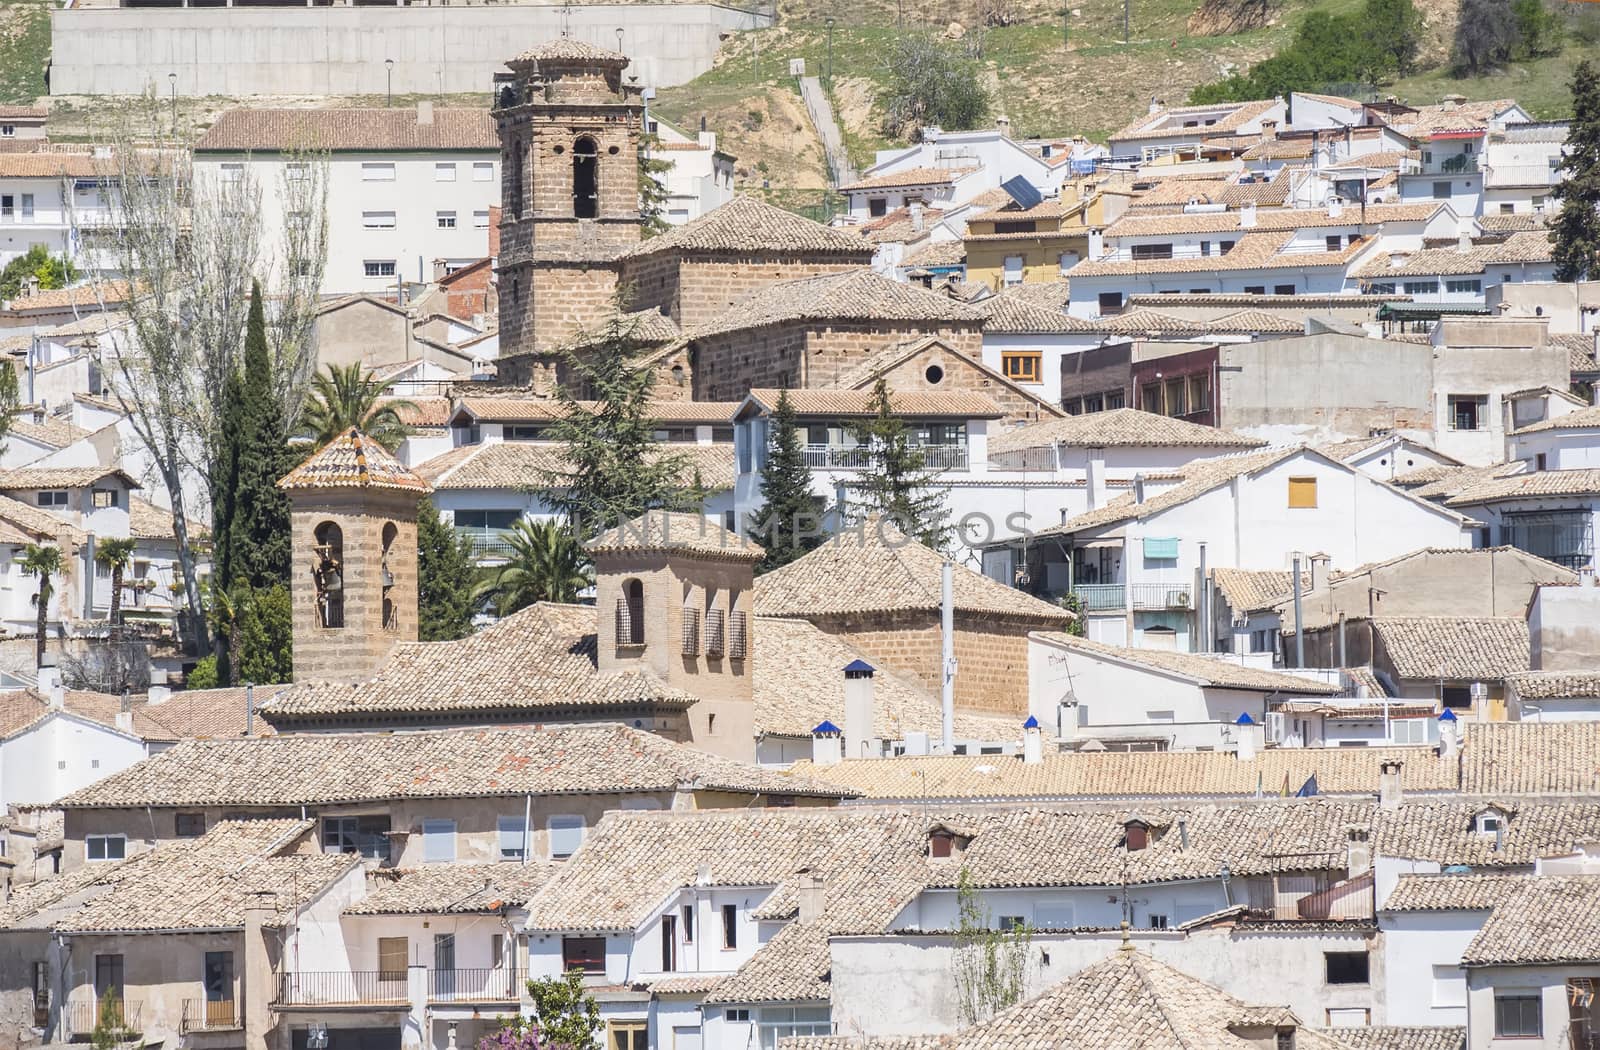 Carmen and San Jose churches in Cazorla, Jaen, Spain